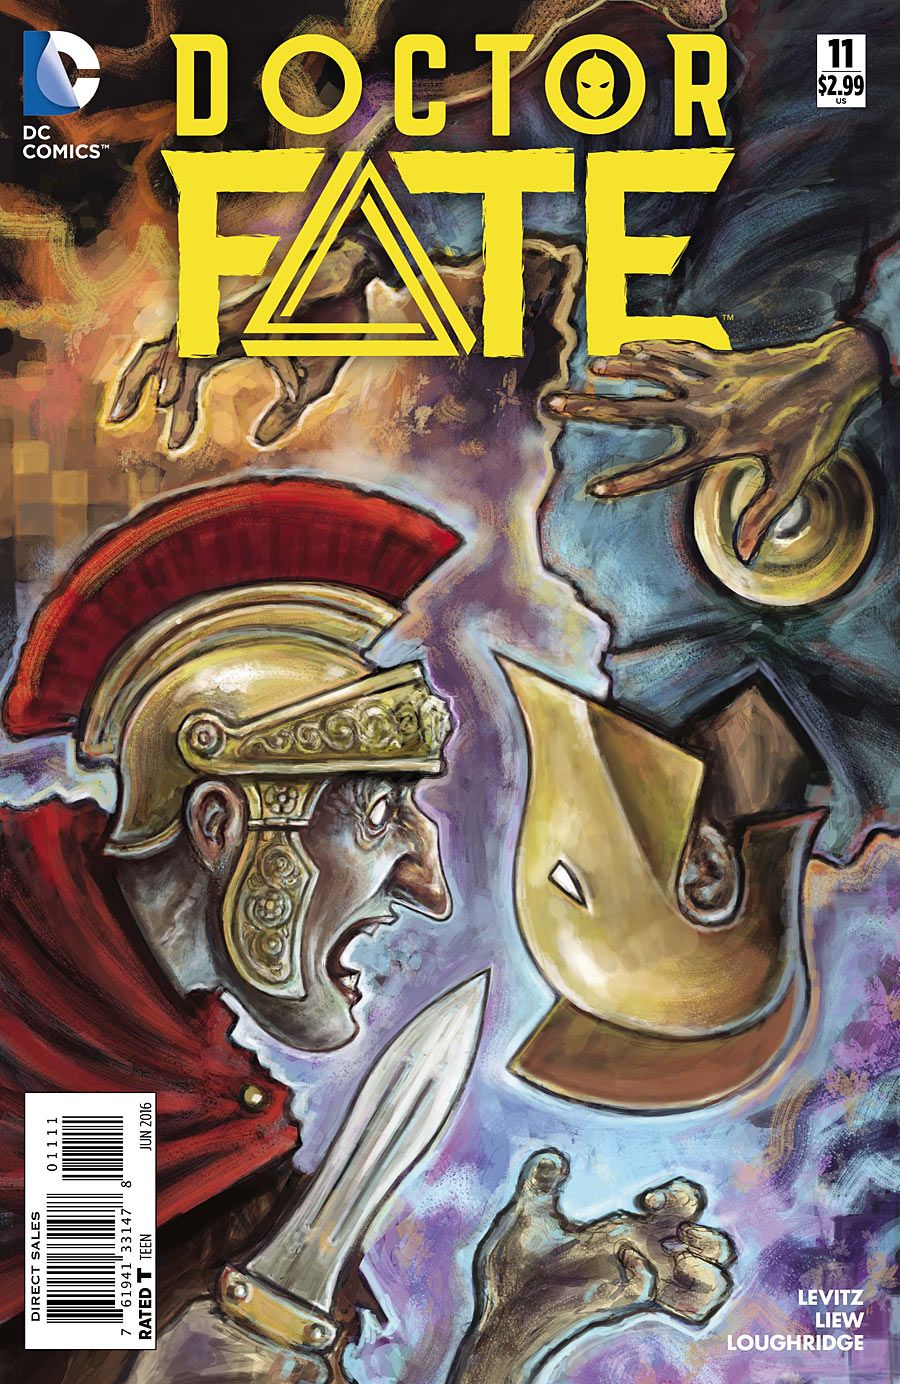 Doctor Fate #11 Comic